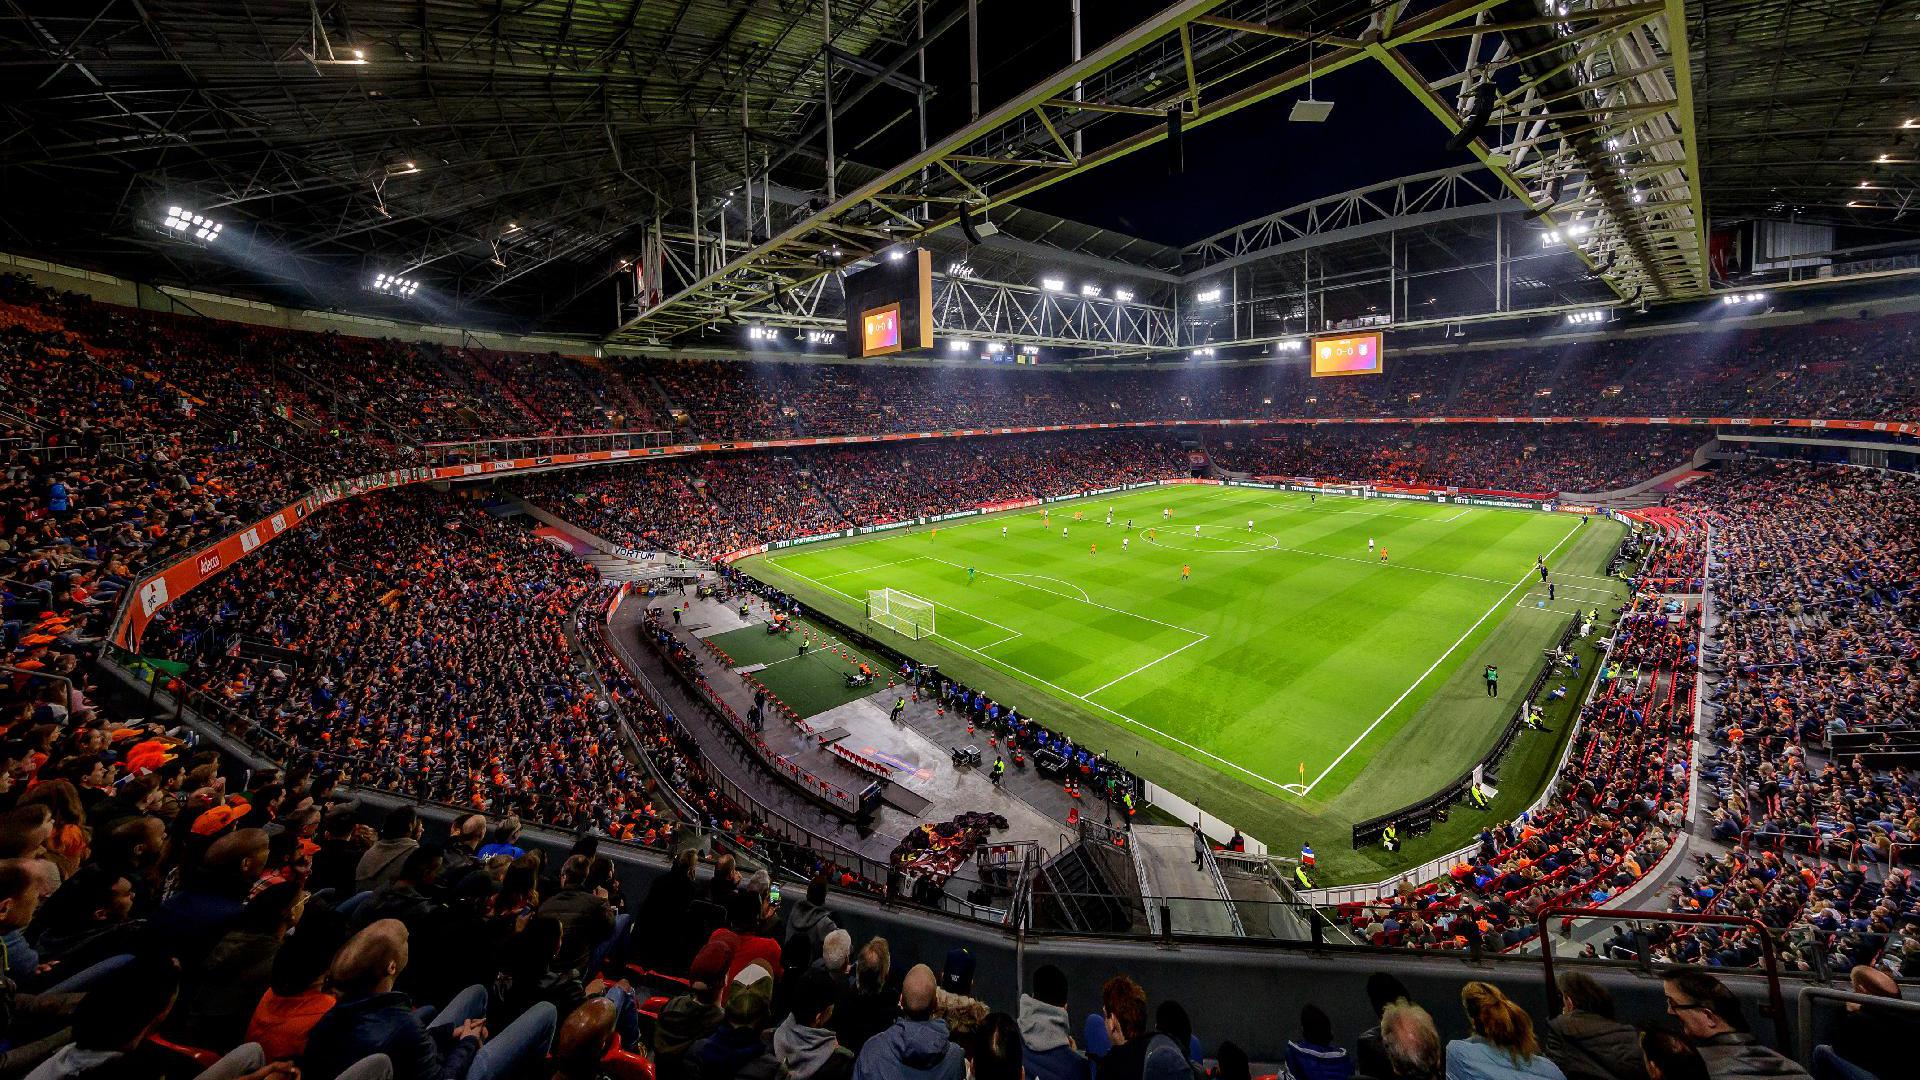 FIFA Infinity Cruijff Arena (Ajax Amsterdam) is in #FIFA19!